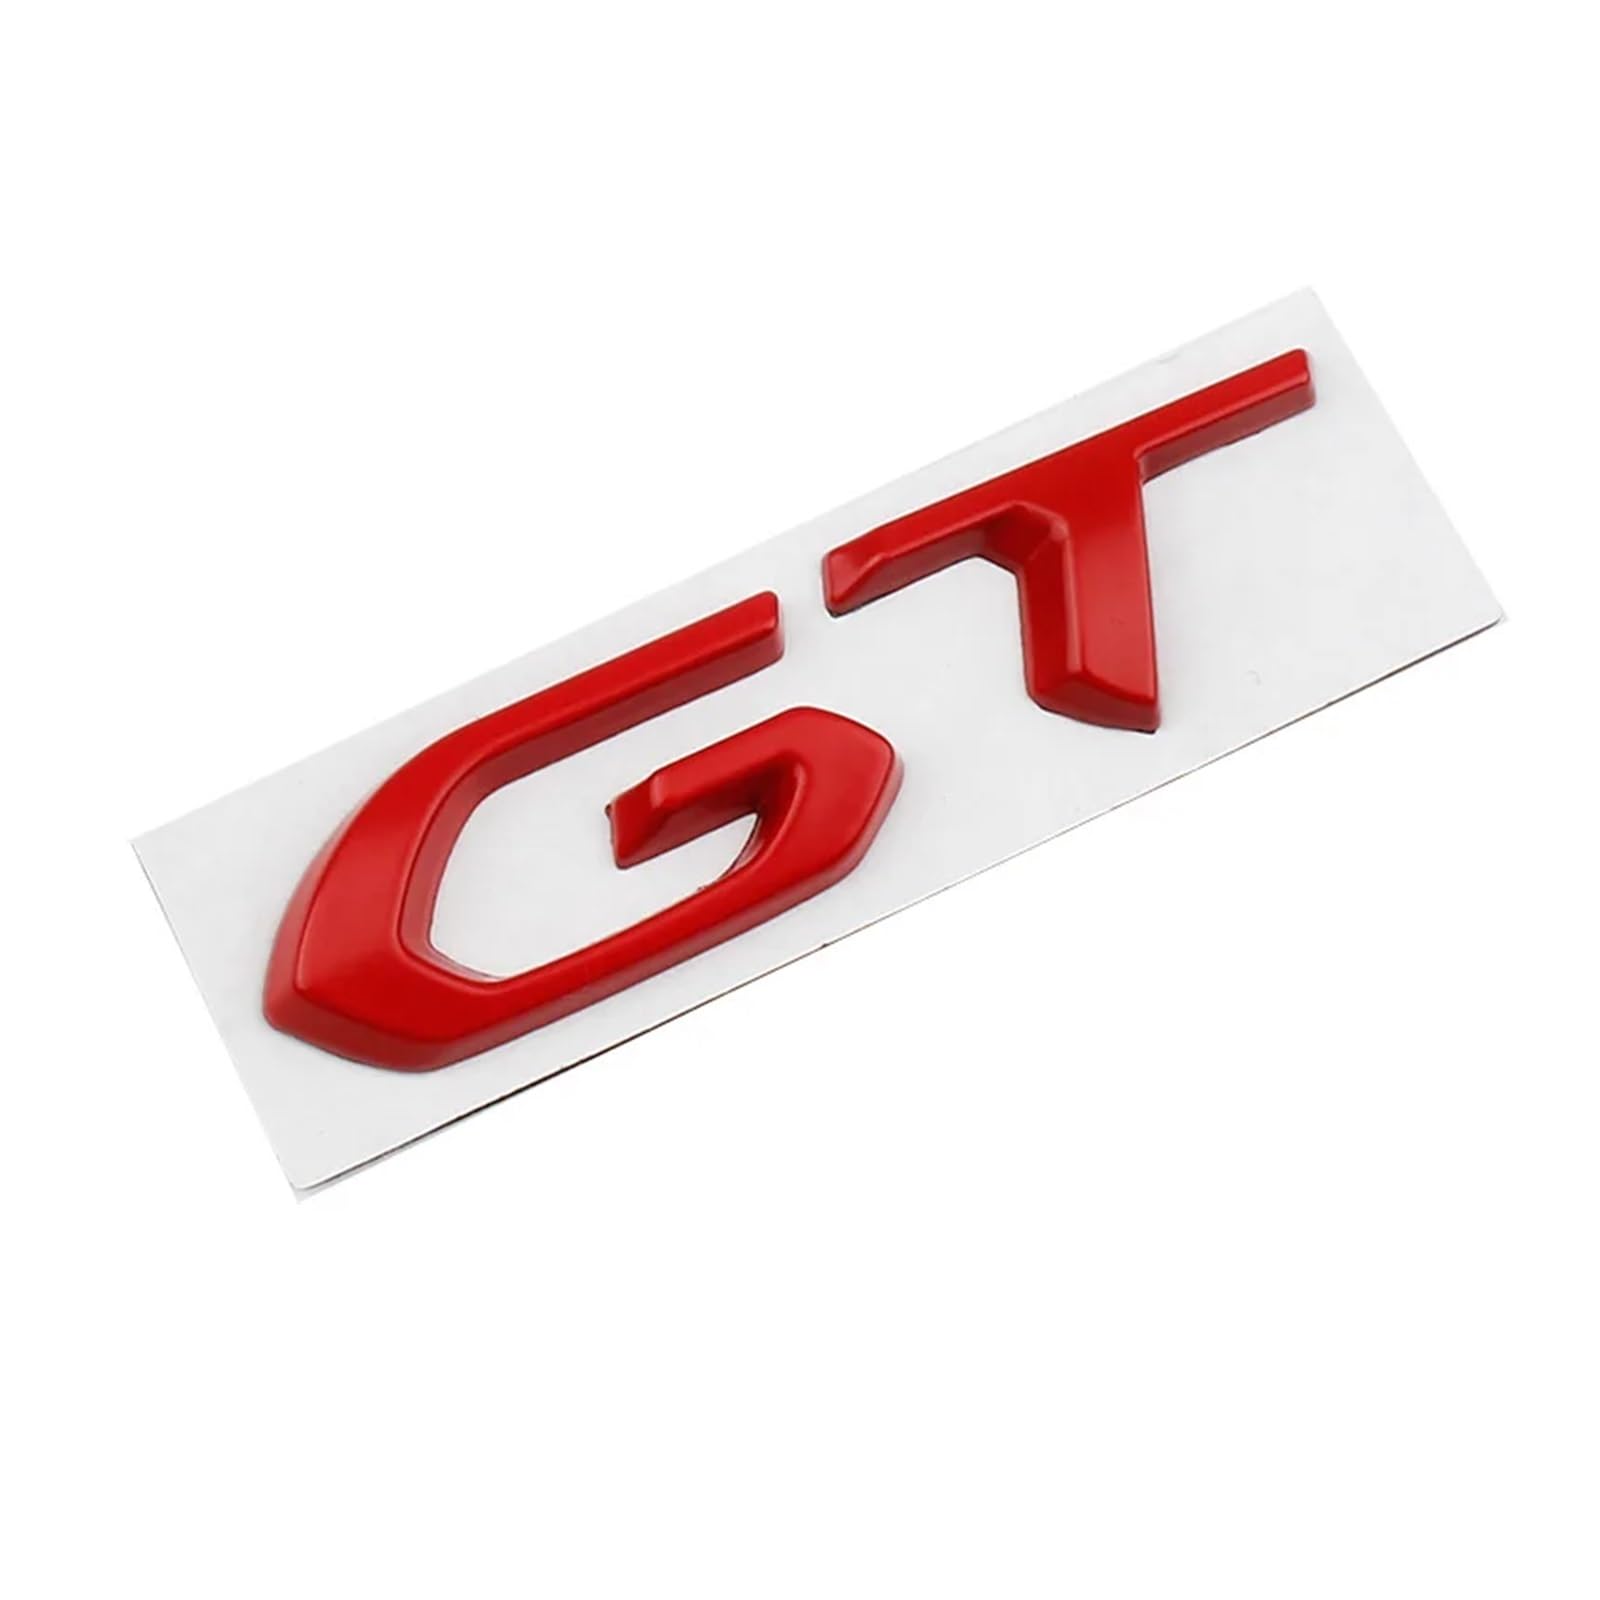 AQXYWQOL Auto 3D Metall GT Logo Aufkleber Aufkleber kompatibel mit 308 407 106 205 206 208 3008 5008 108 406 408 306 Kofferraum Emblem Abzeichen Aufkleber Farbe ist konstant, verblasst nicht und besch von AQXYWQOL